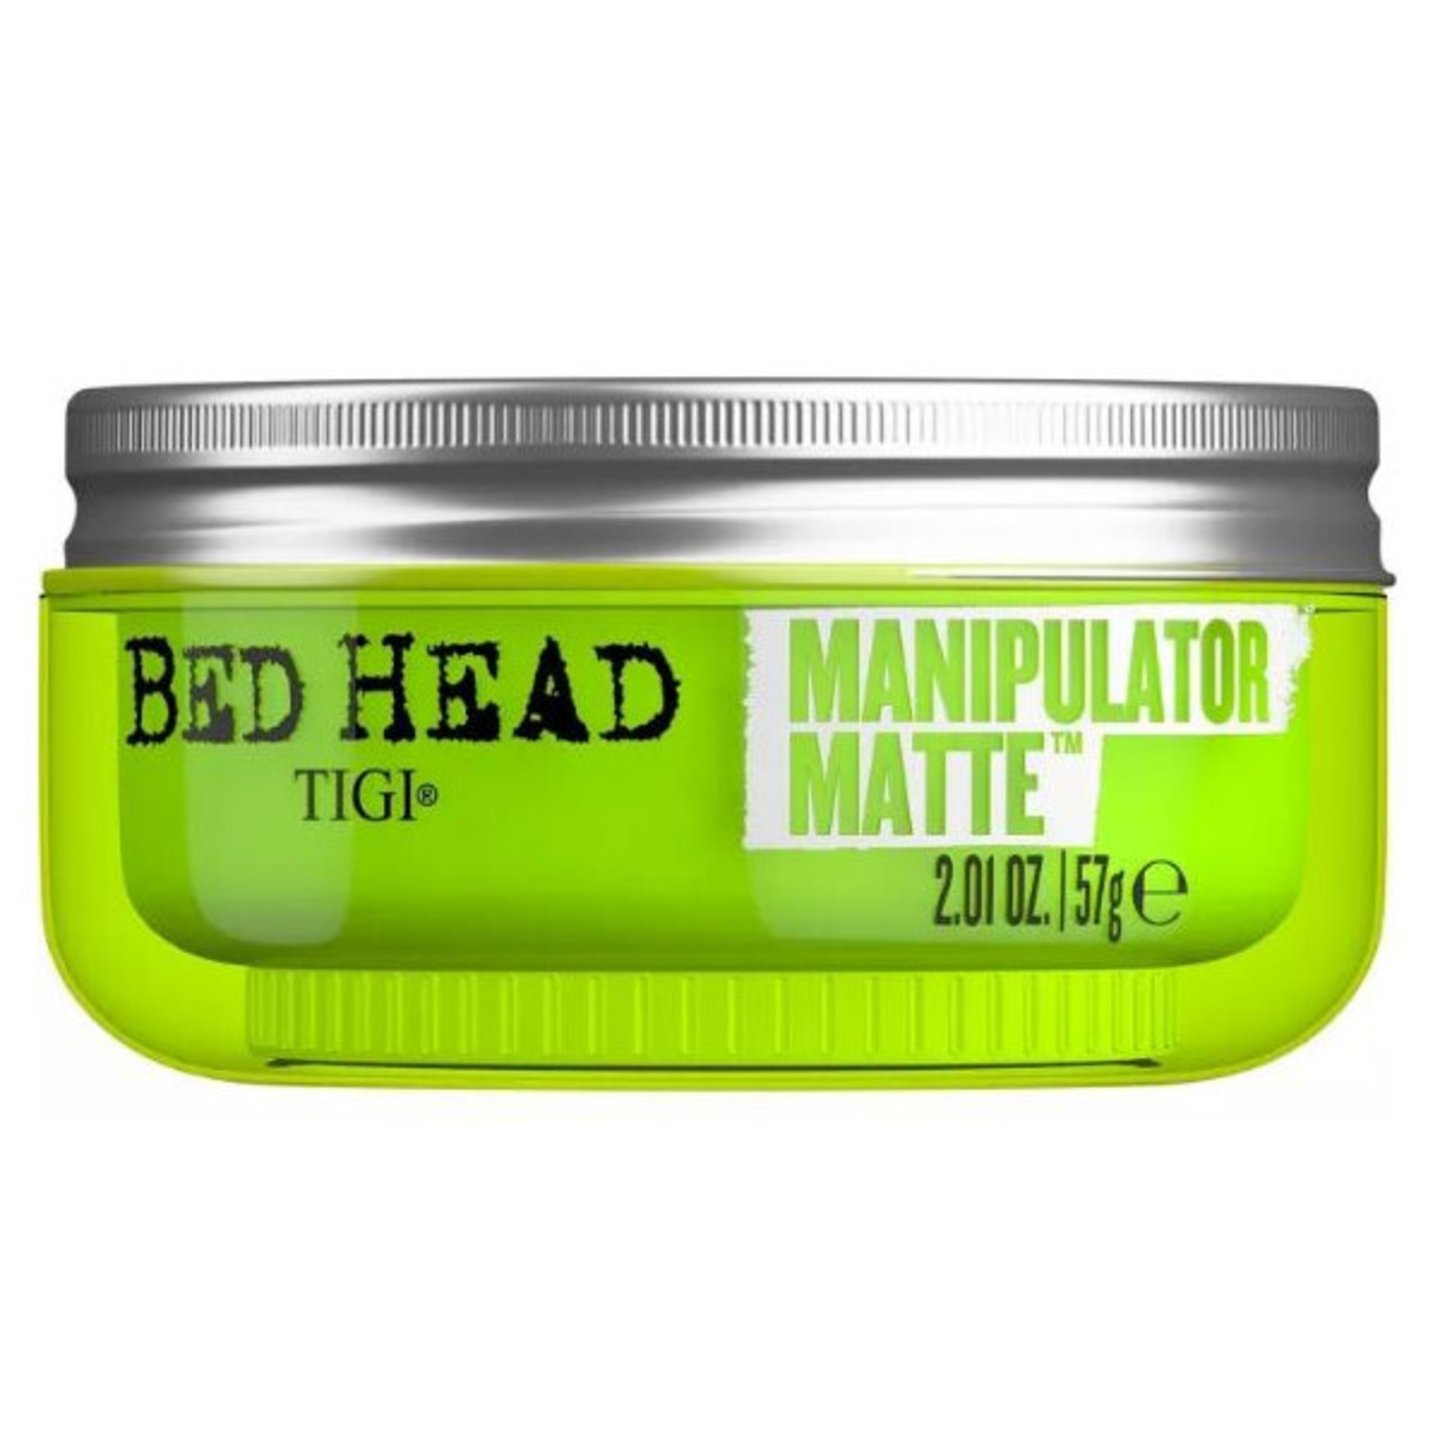 Bed Head Manipulator Cera Efecto Mate Tigi